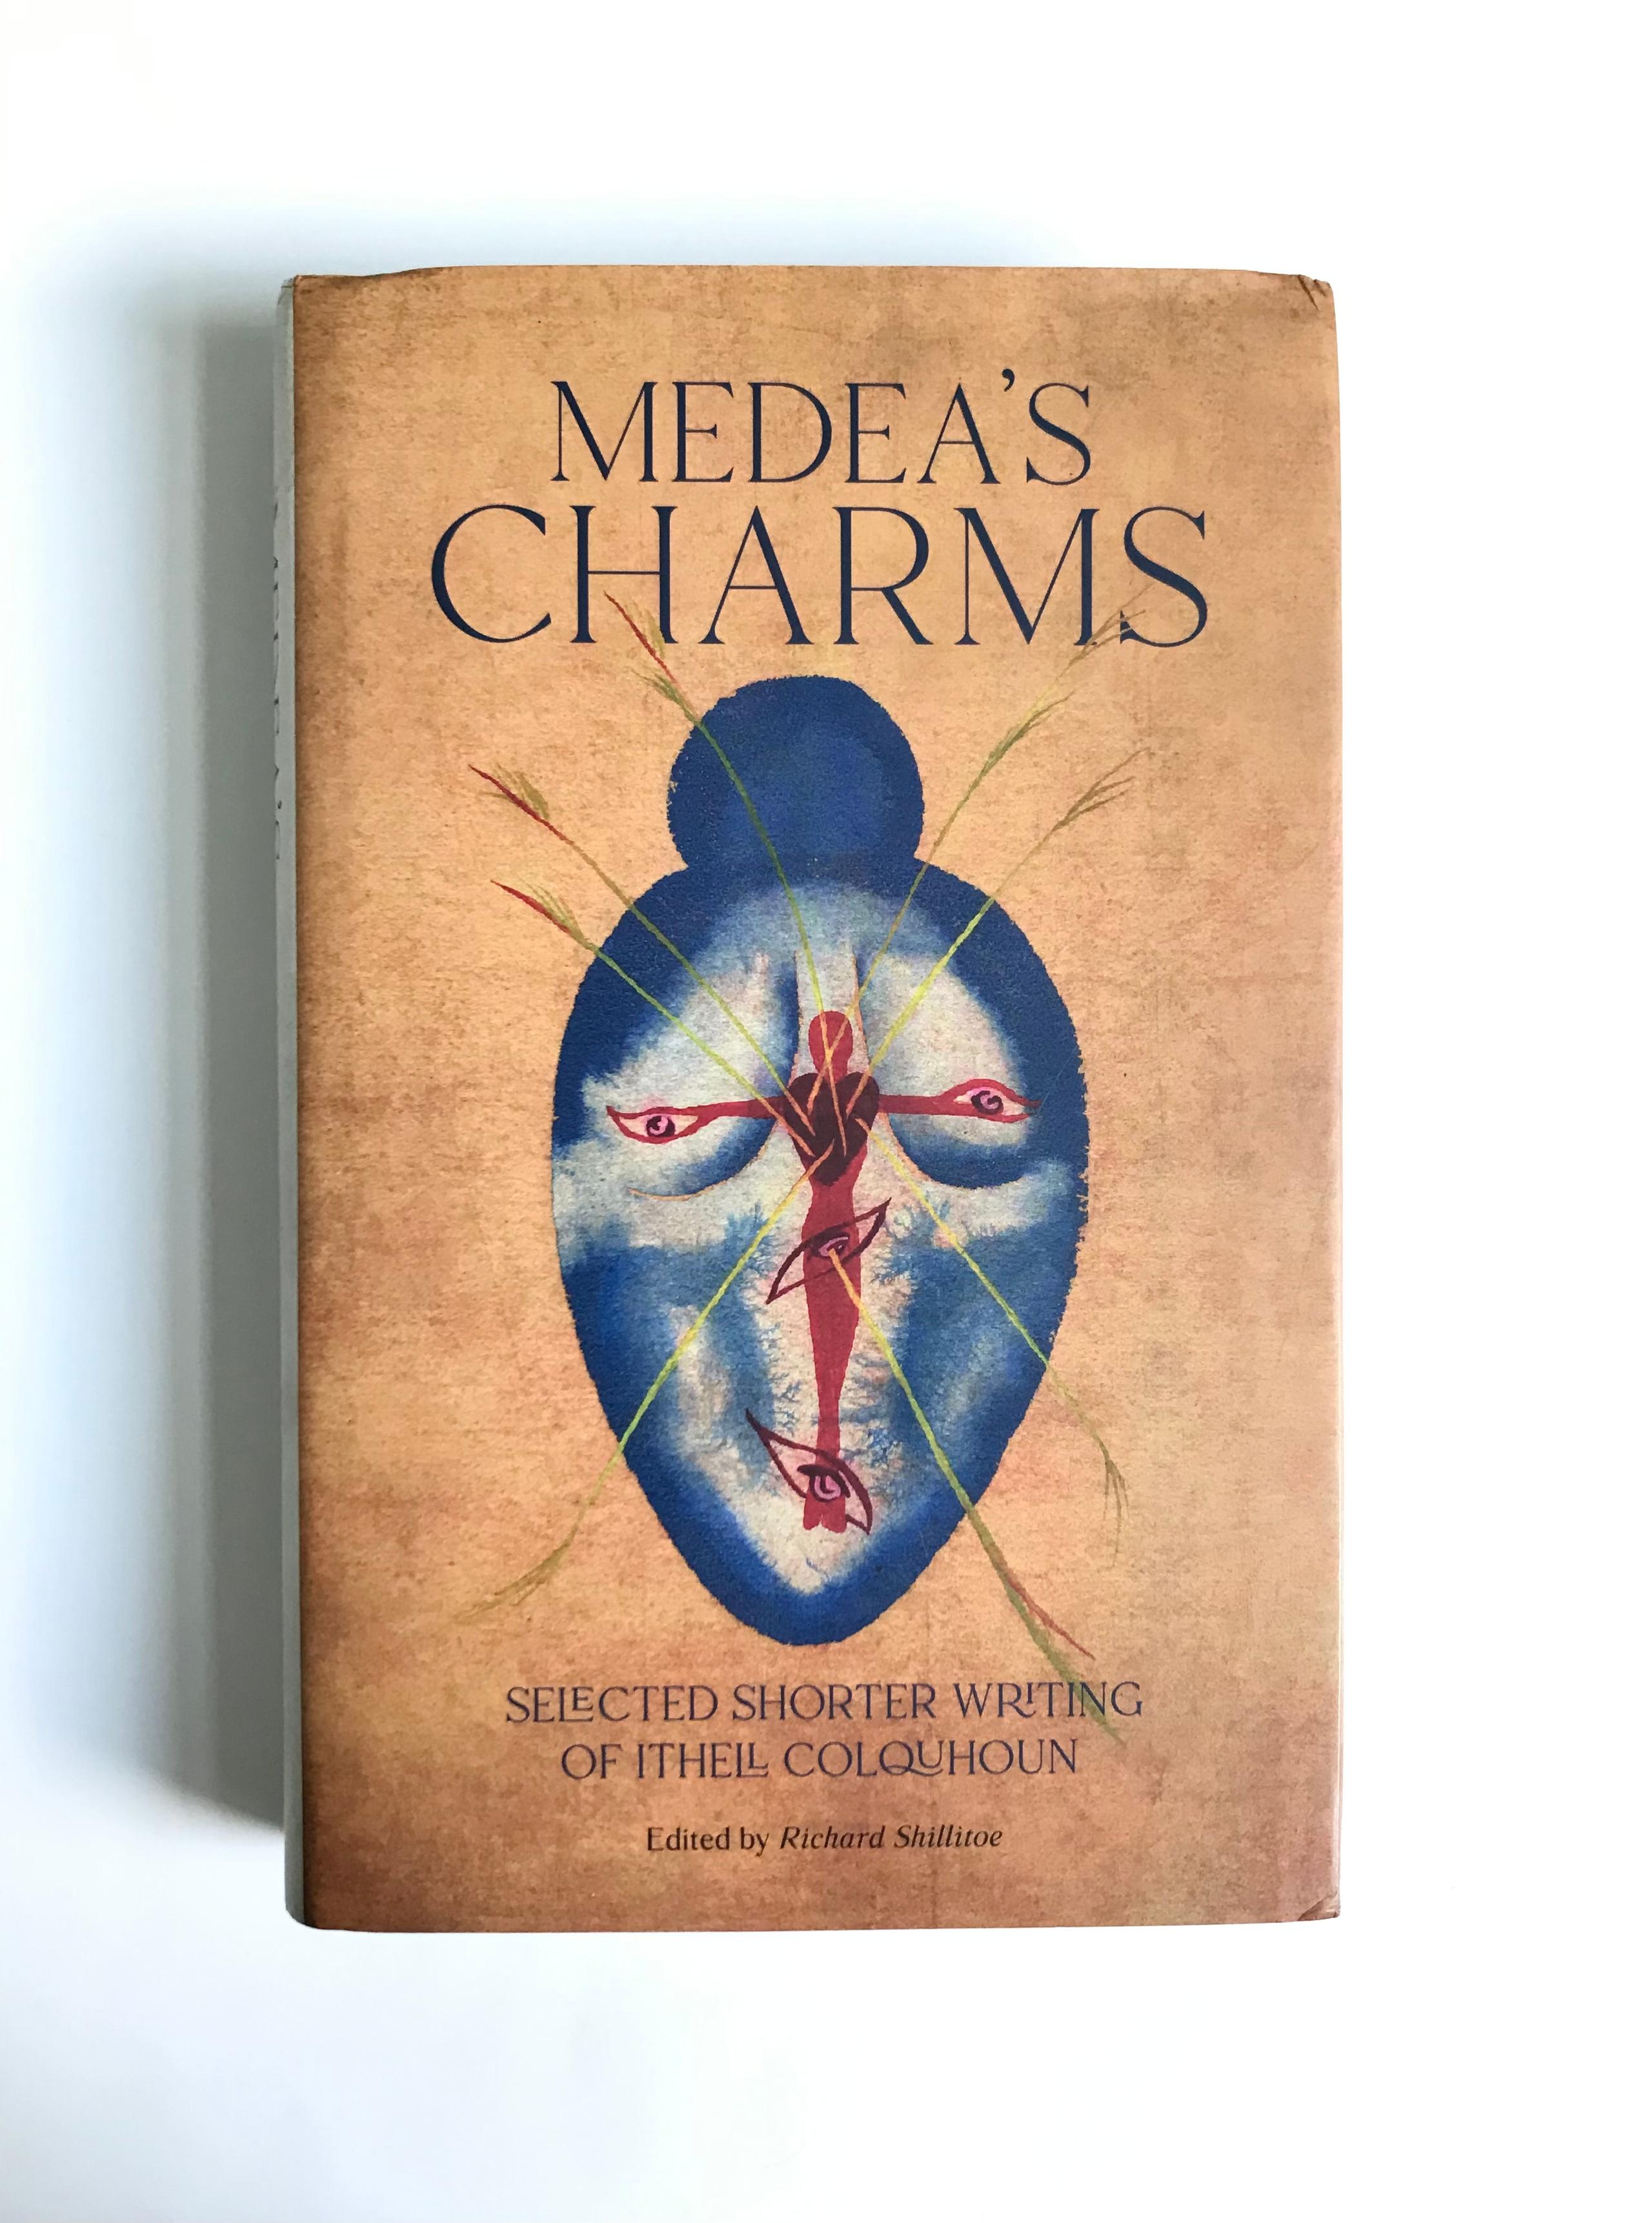 Medea's Charms: Selected Shorter Writing of Ithell Colquhoun